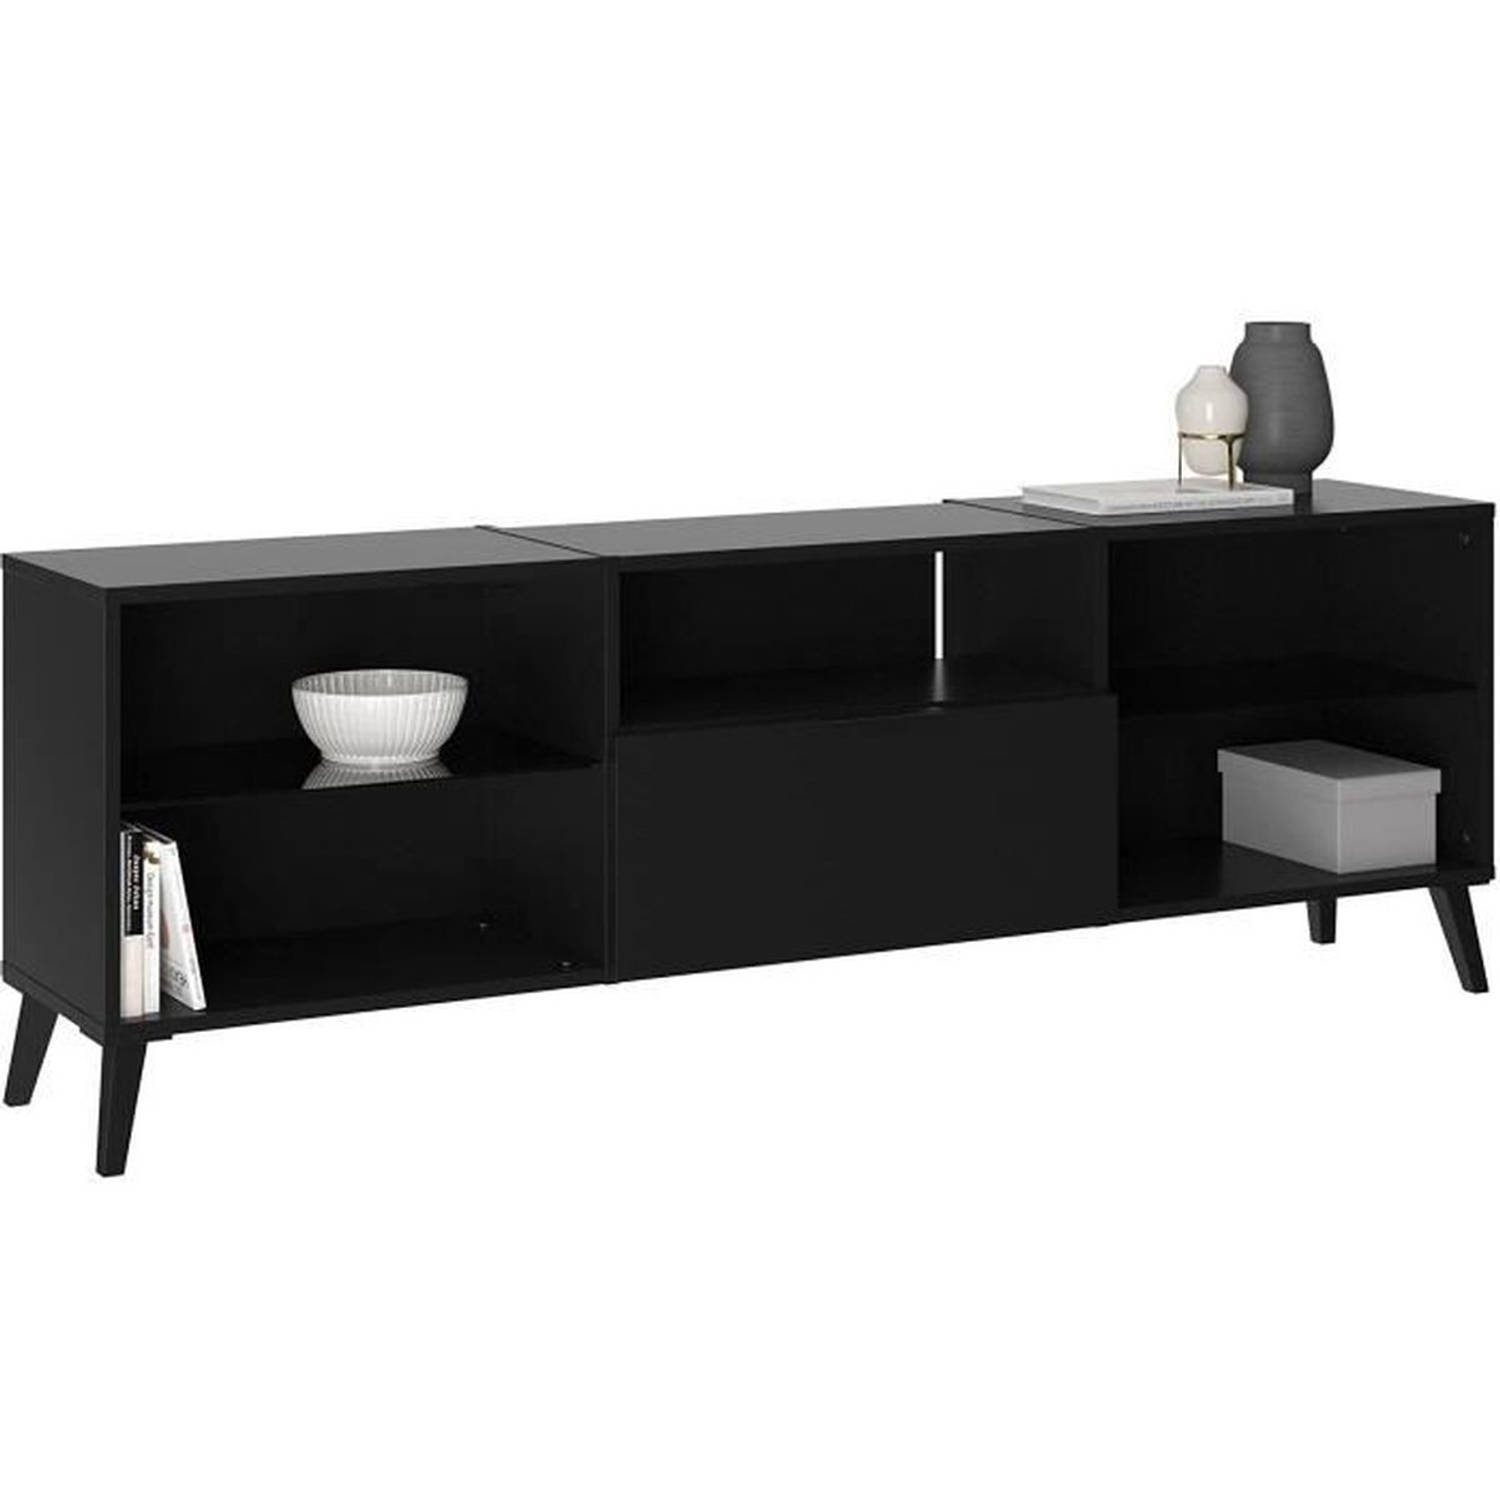 Lowboard TV/Hifi meubel - Zwart decor - L153,5 x H52 x D31,5 cm - Made in Germany